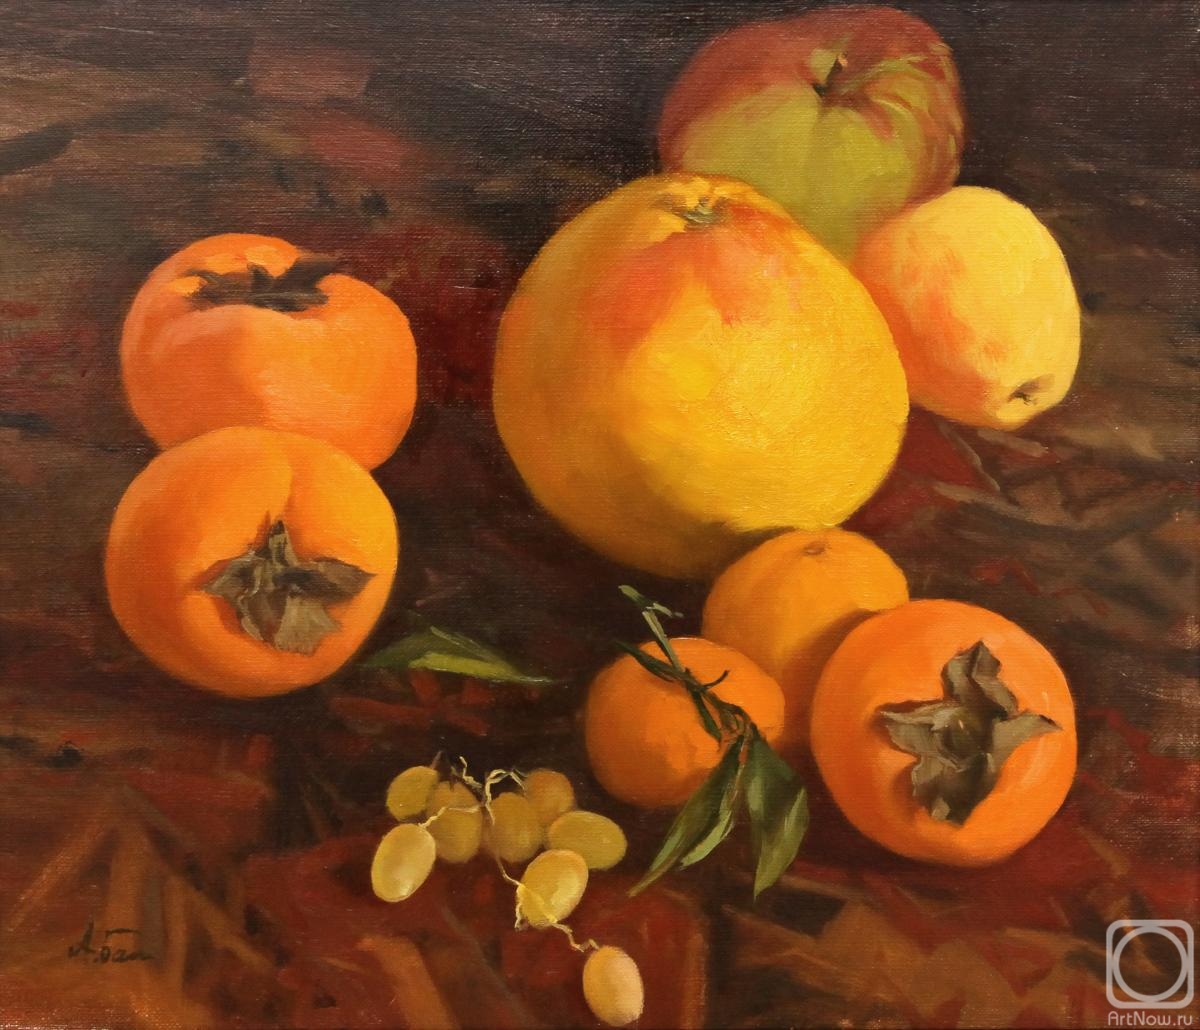 Balychev Andrey. Grapefruit and persimmon